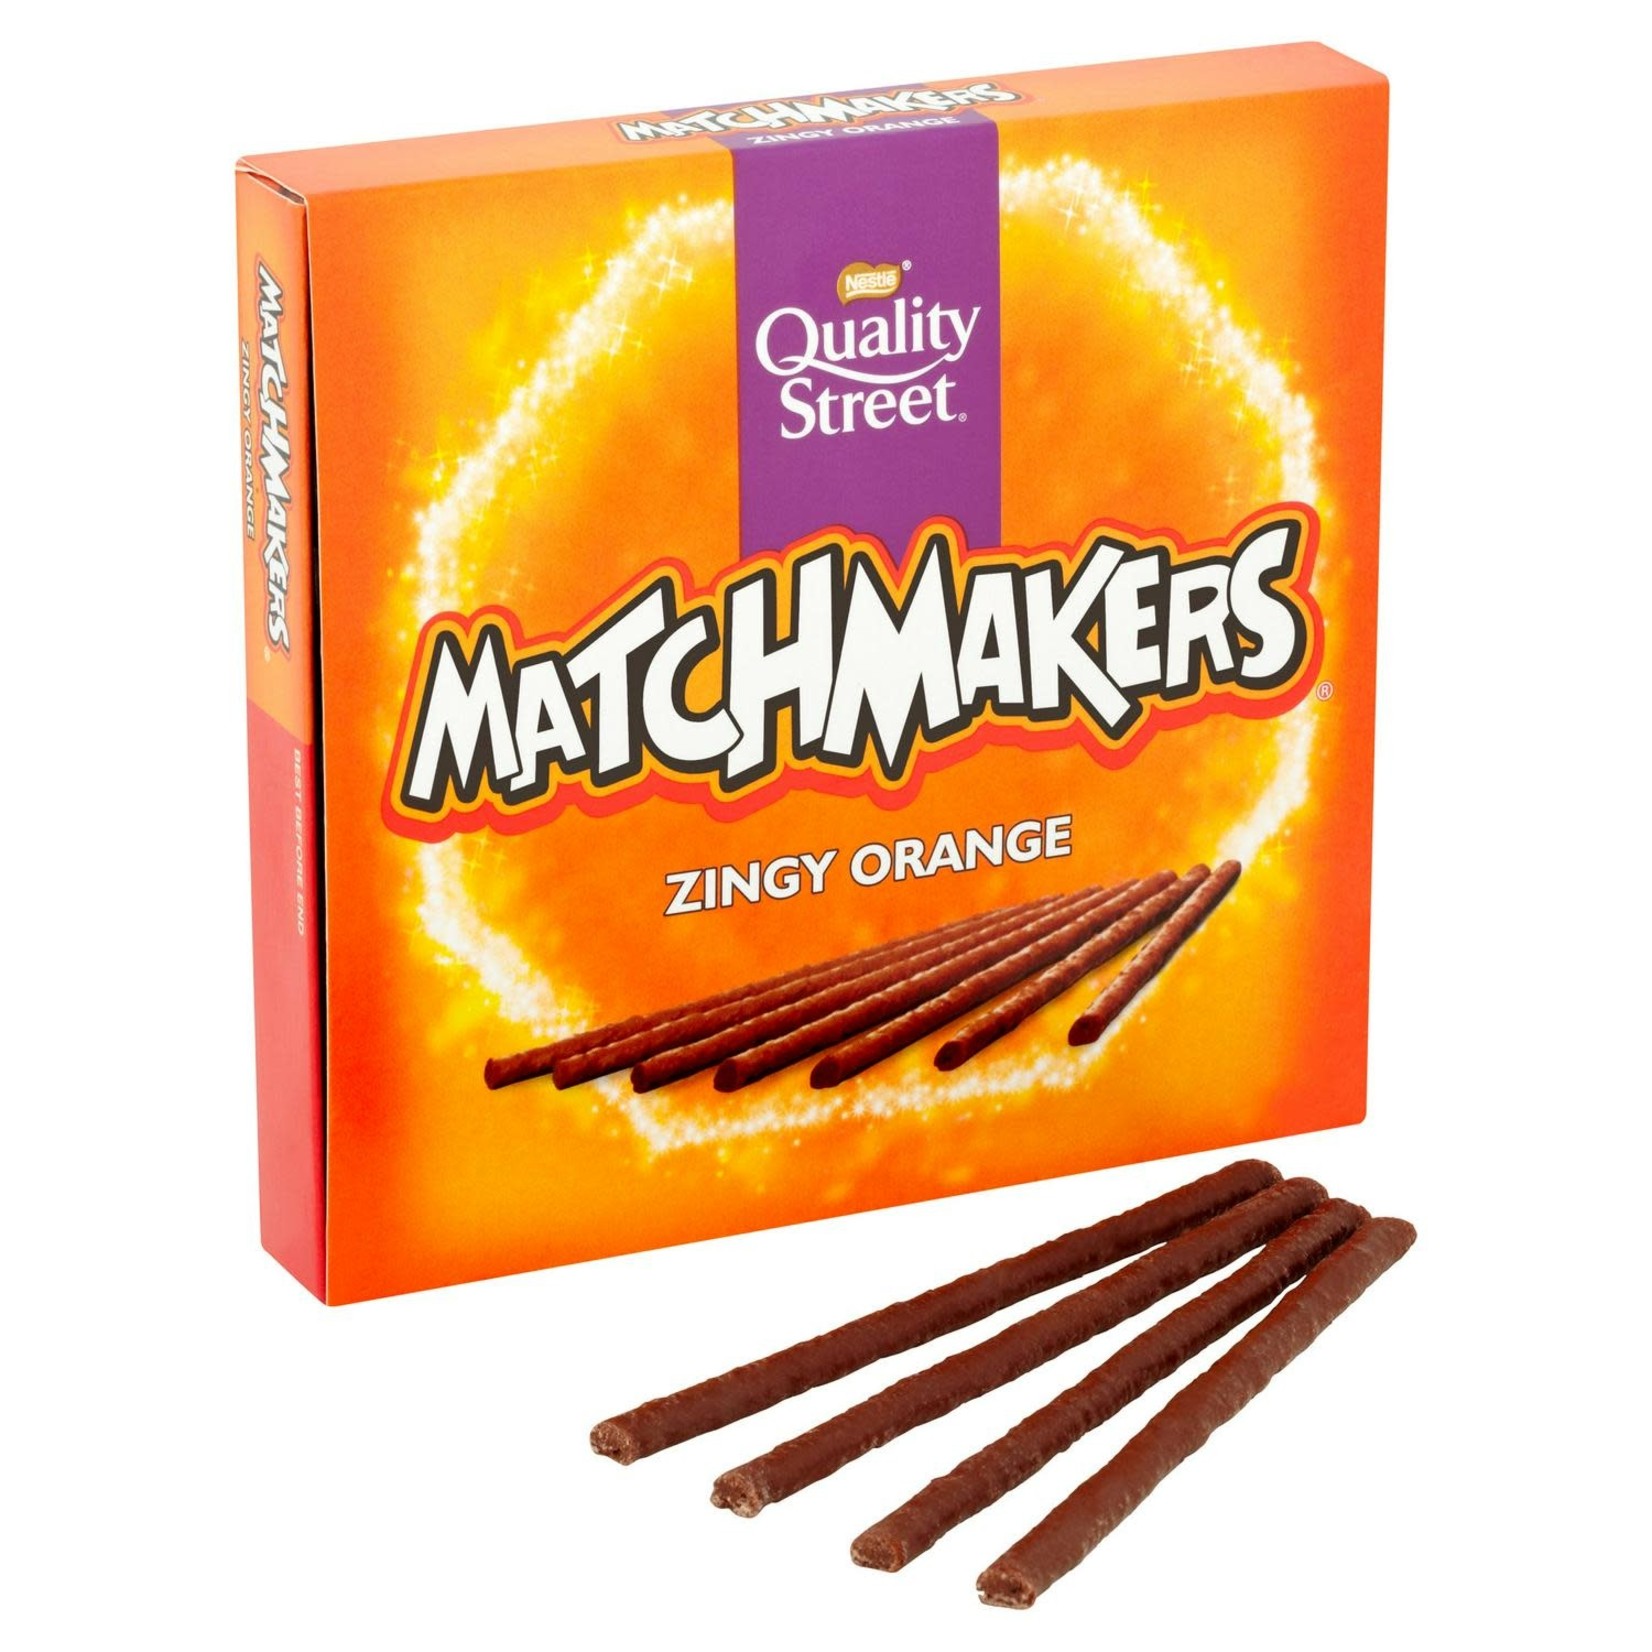 Quality Street Matchmakers Zingy Orange Chocolates